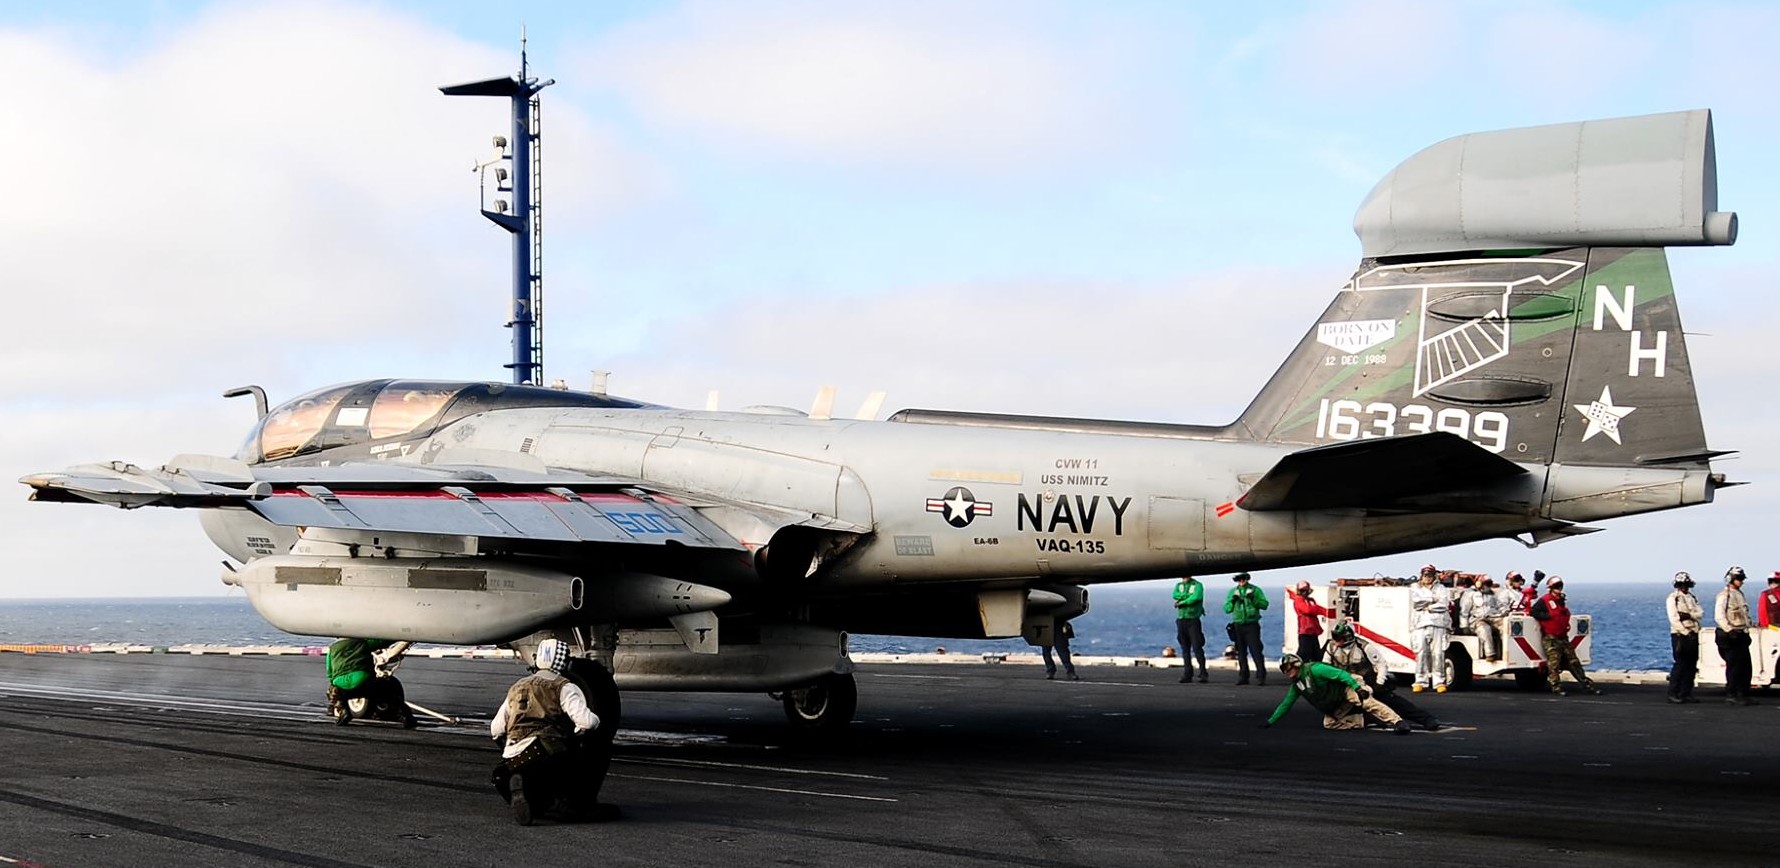 vaq-135 black ravens electronic attack squadron vaqron us navy gruman ea-6b prowler cvw-11 uss nimitz cvn-68 48